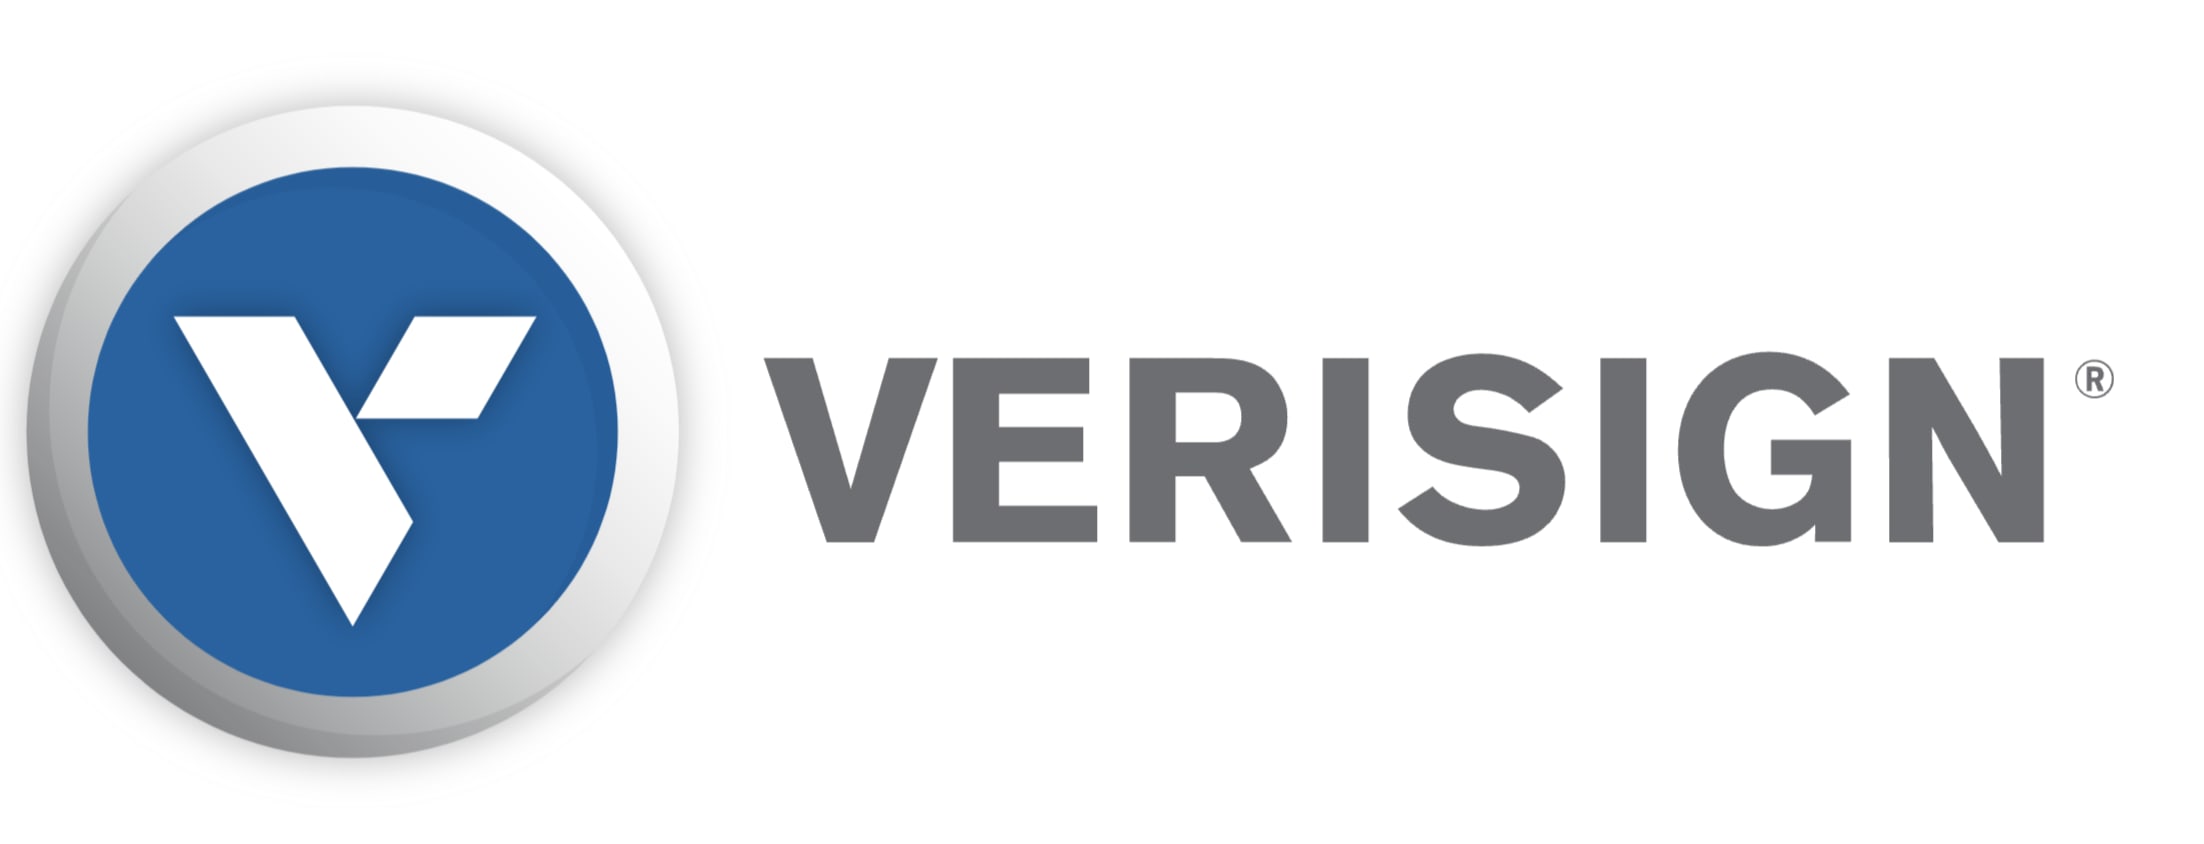 Verisign logo